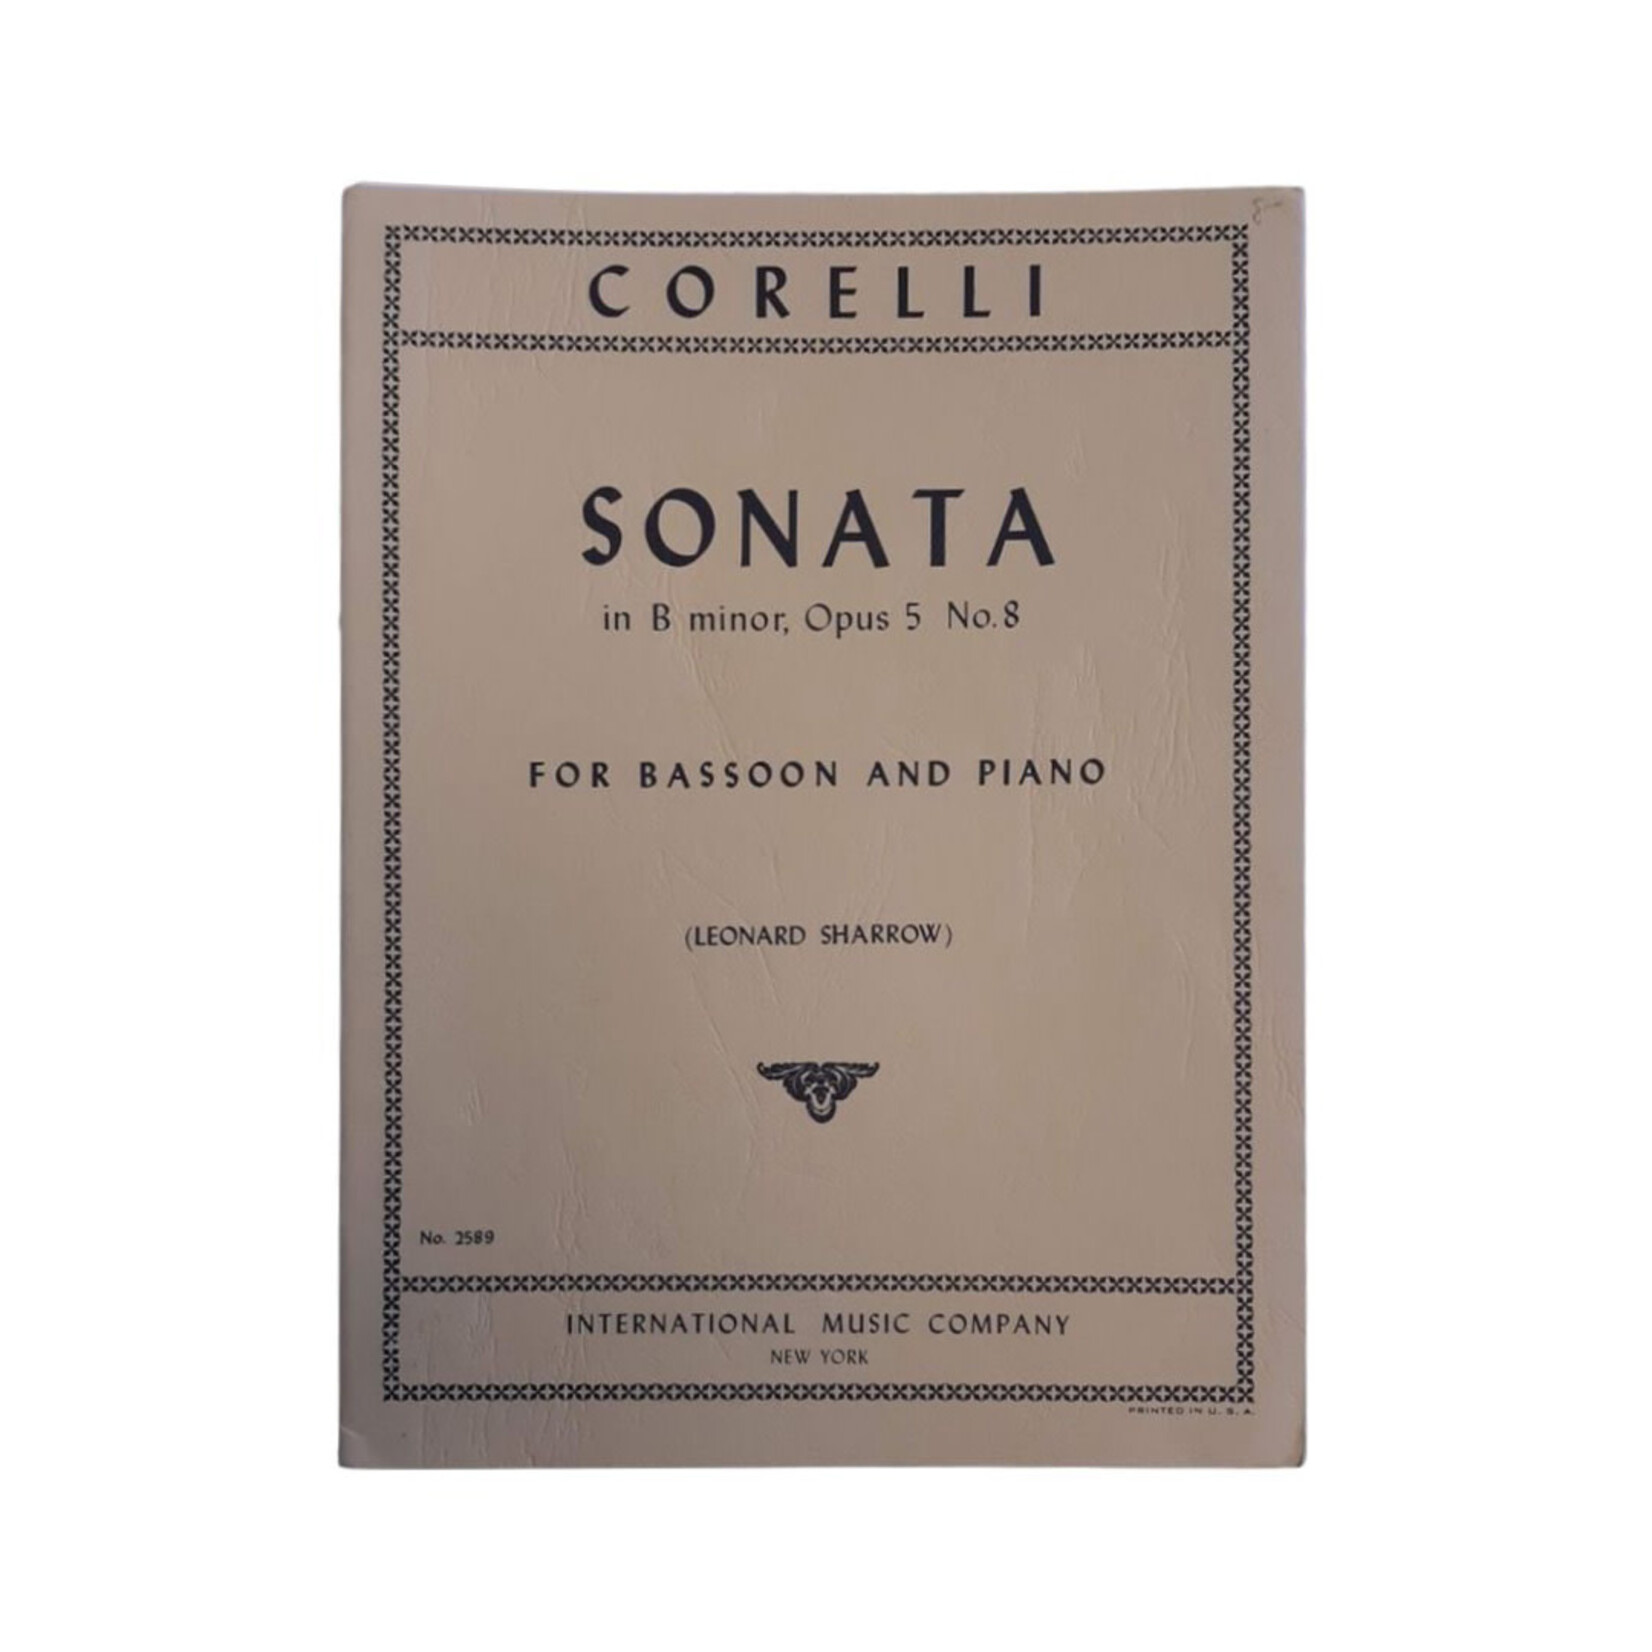 International Music Company Sonata in B minor, Op. 5 No. 8 by Corelli - International Music Company